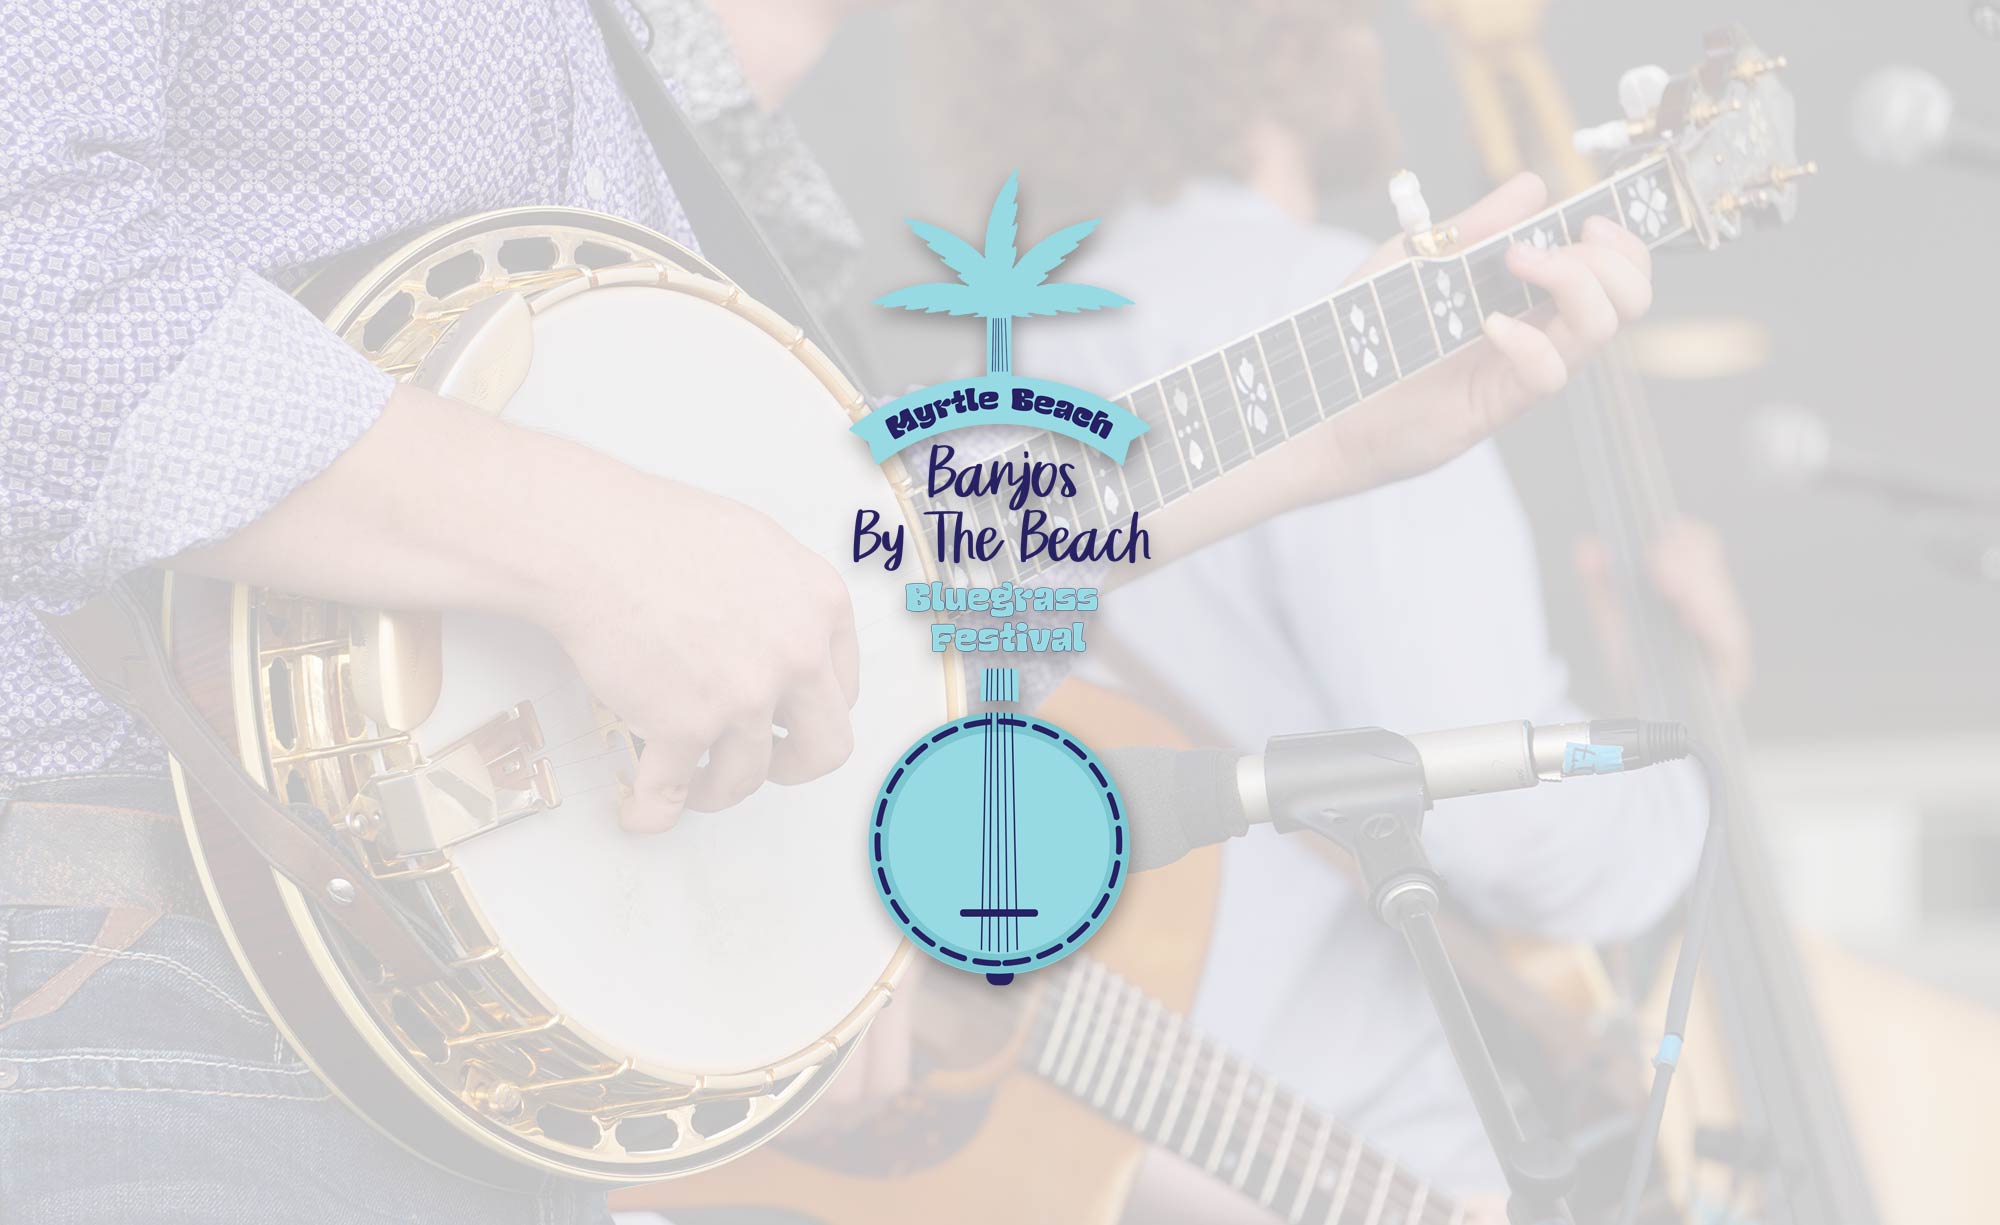 Myrtle Beach Bluegrass Festival Banjos By The Beach